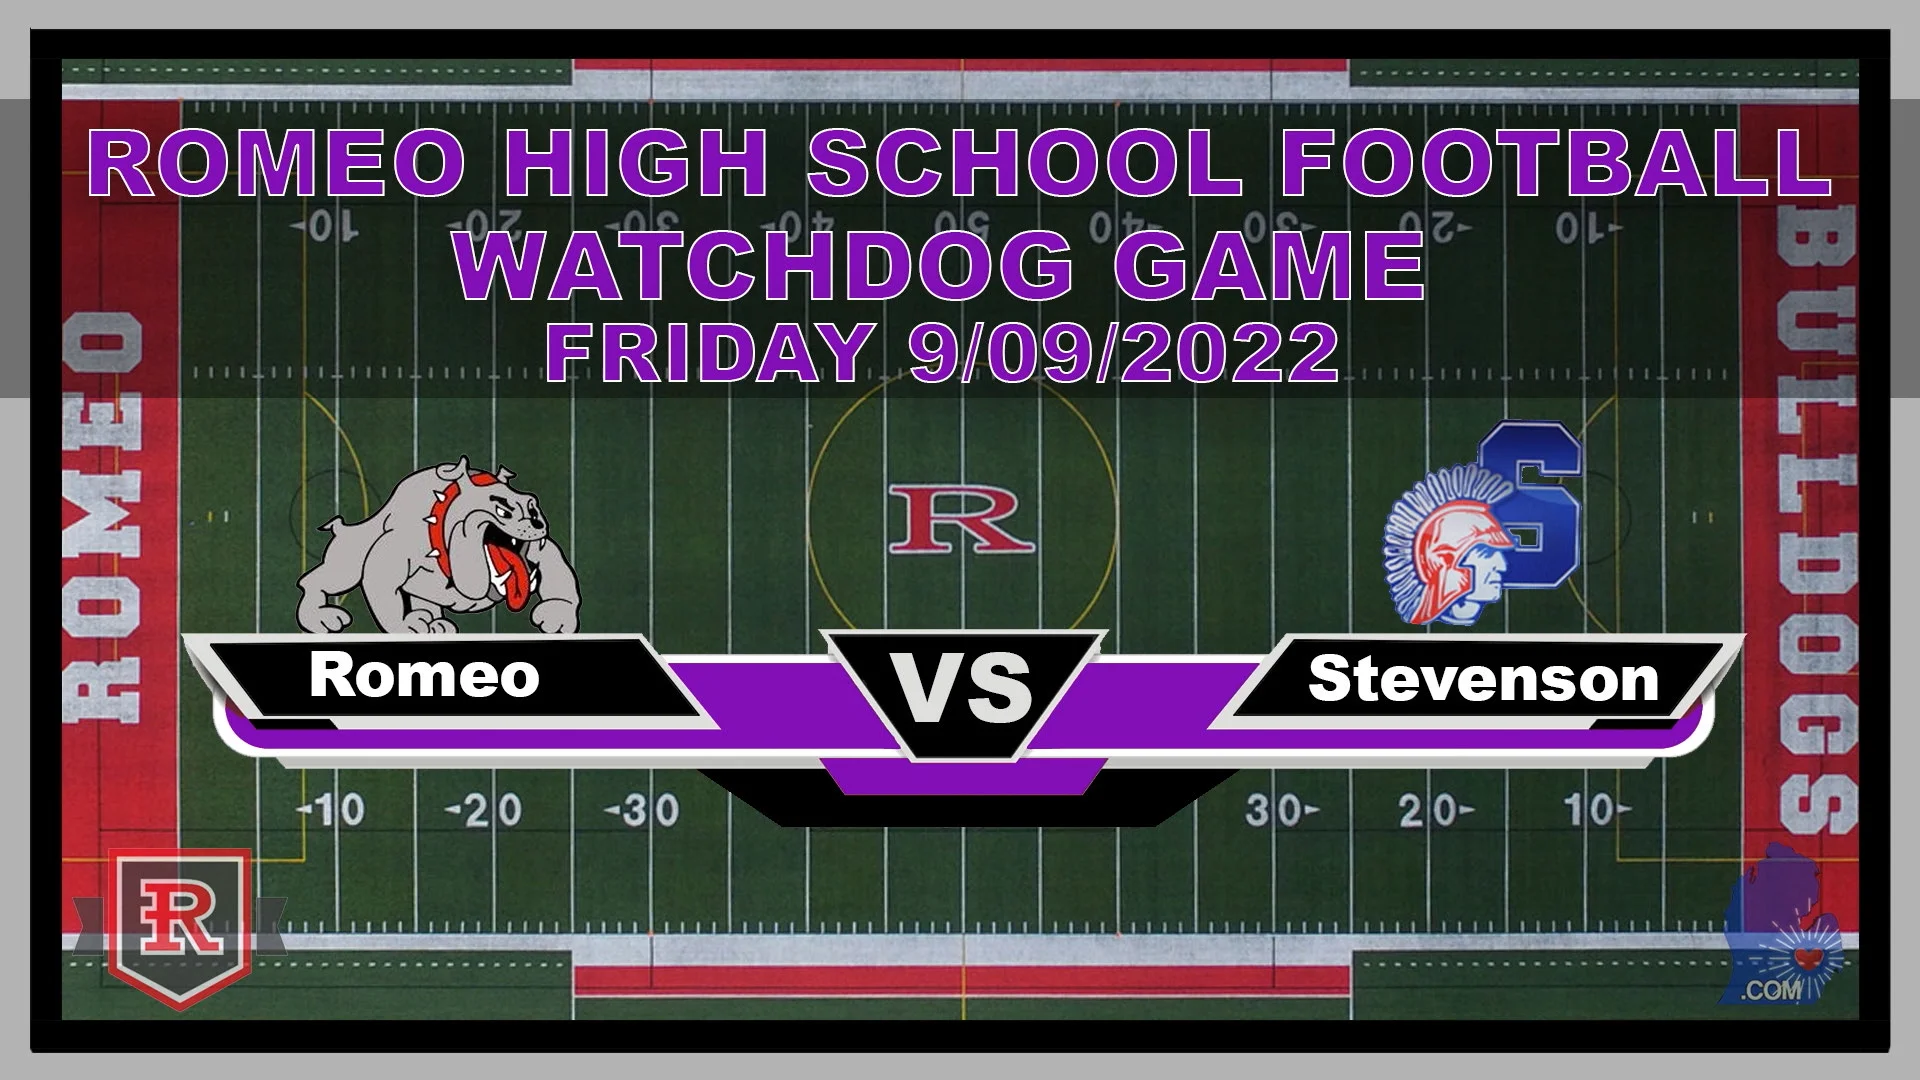 Romeo's 'amazing' Watchdog game 'what high school football